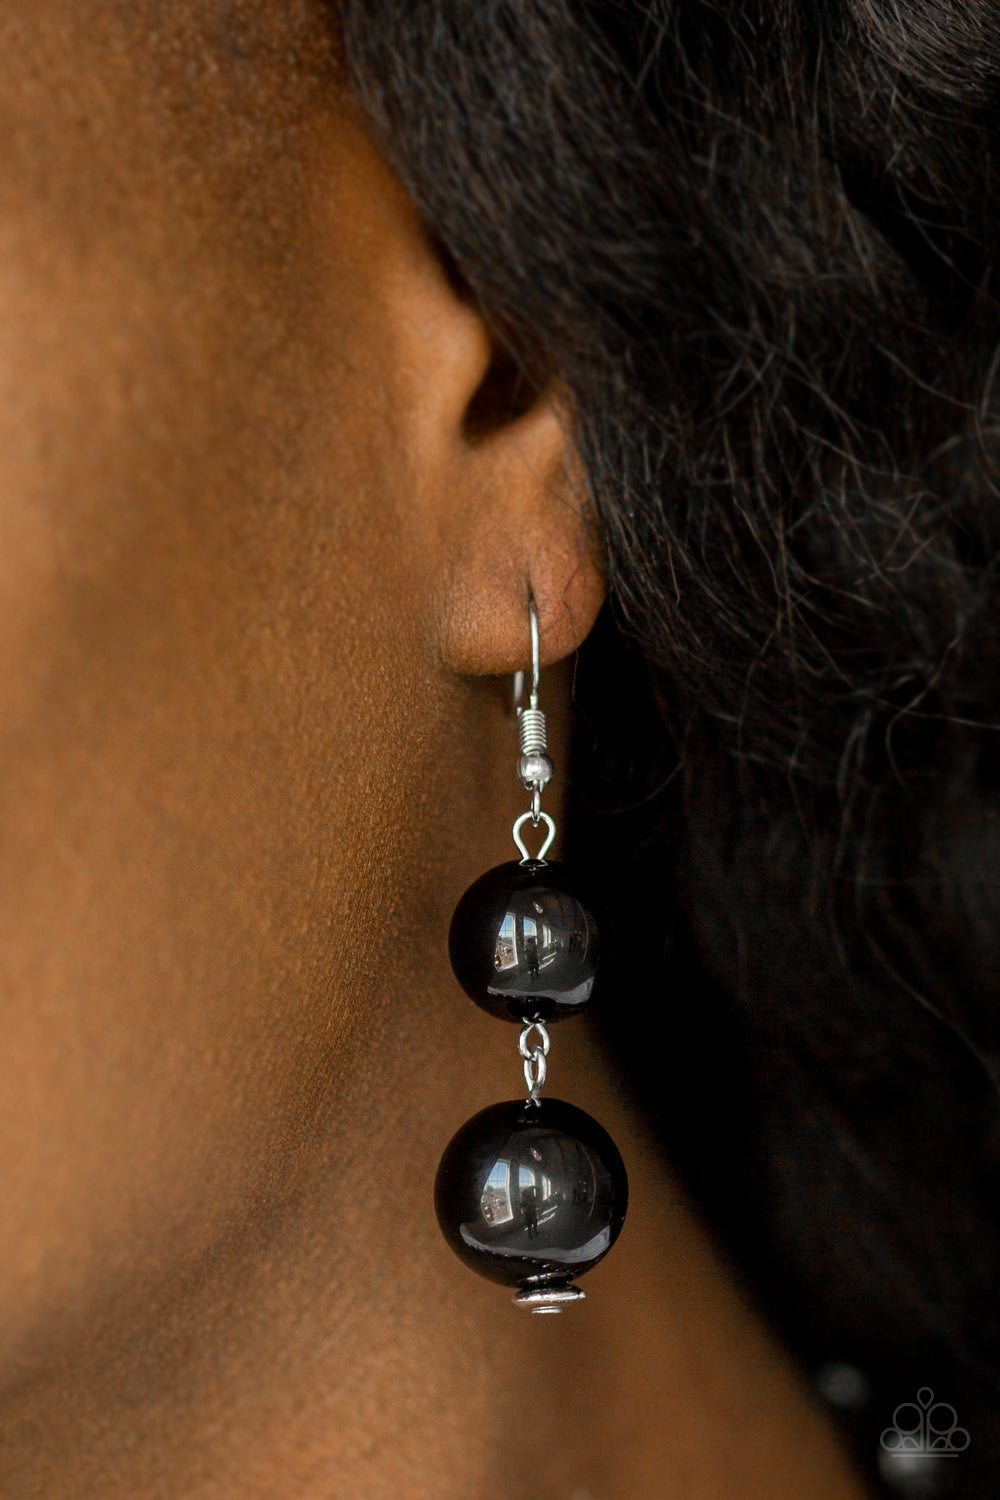 Paparazzi Accessories  - New York Nightlife - #N168 Black Necklace